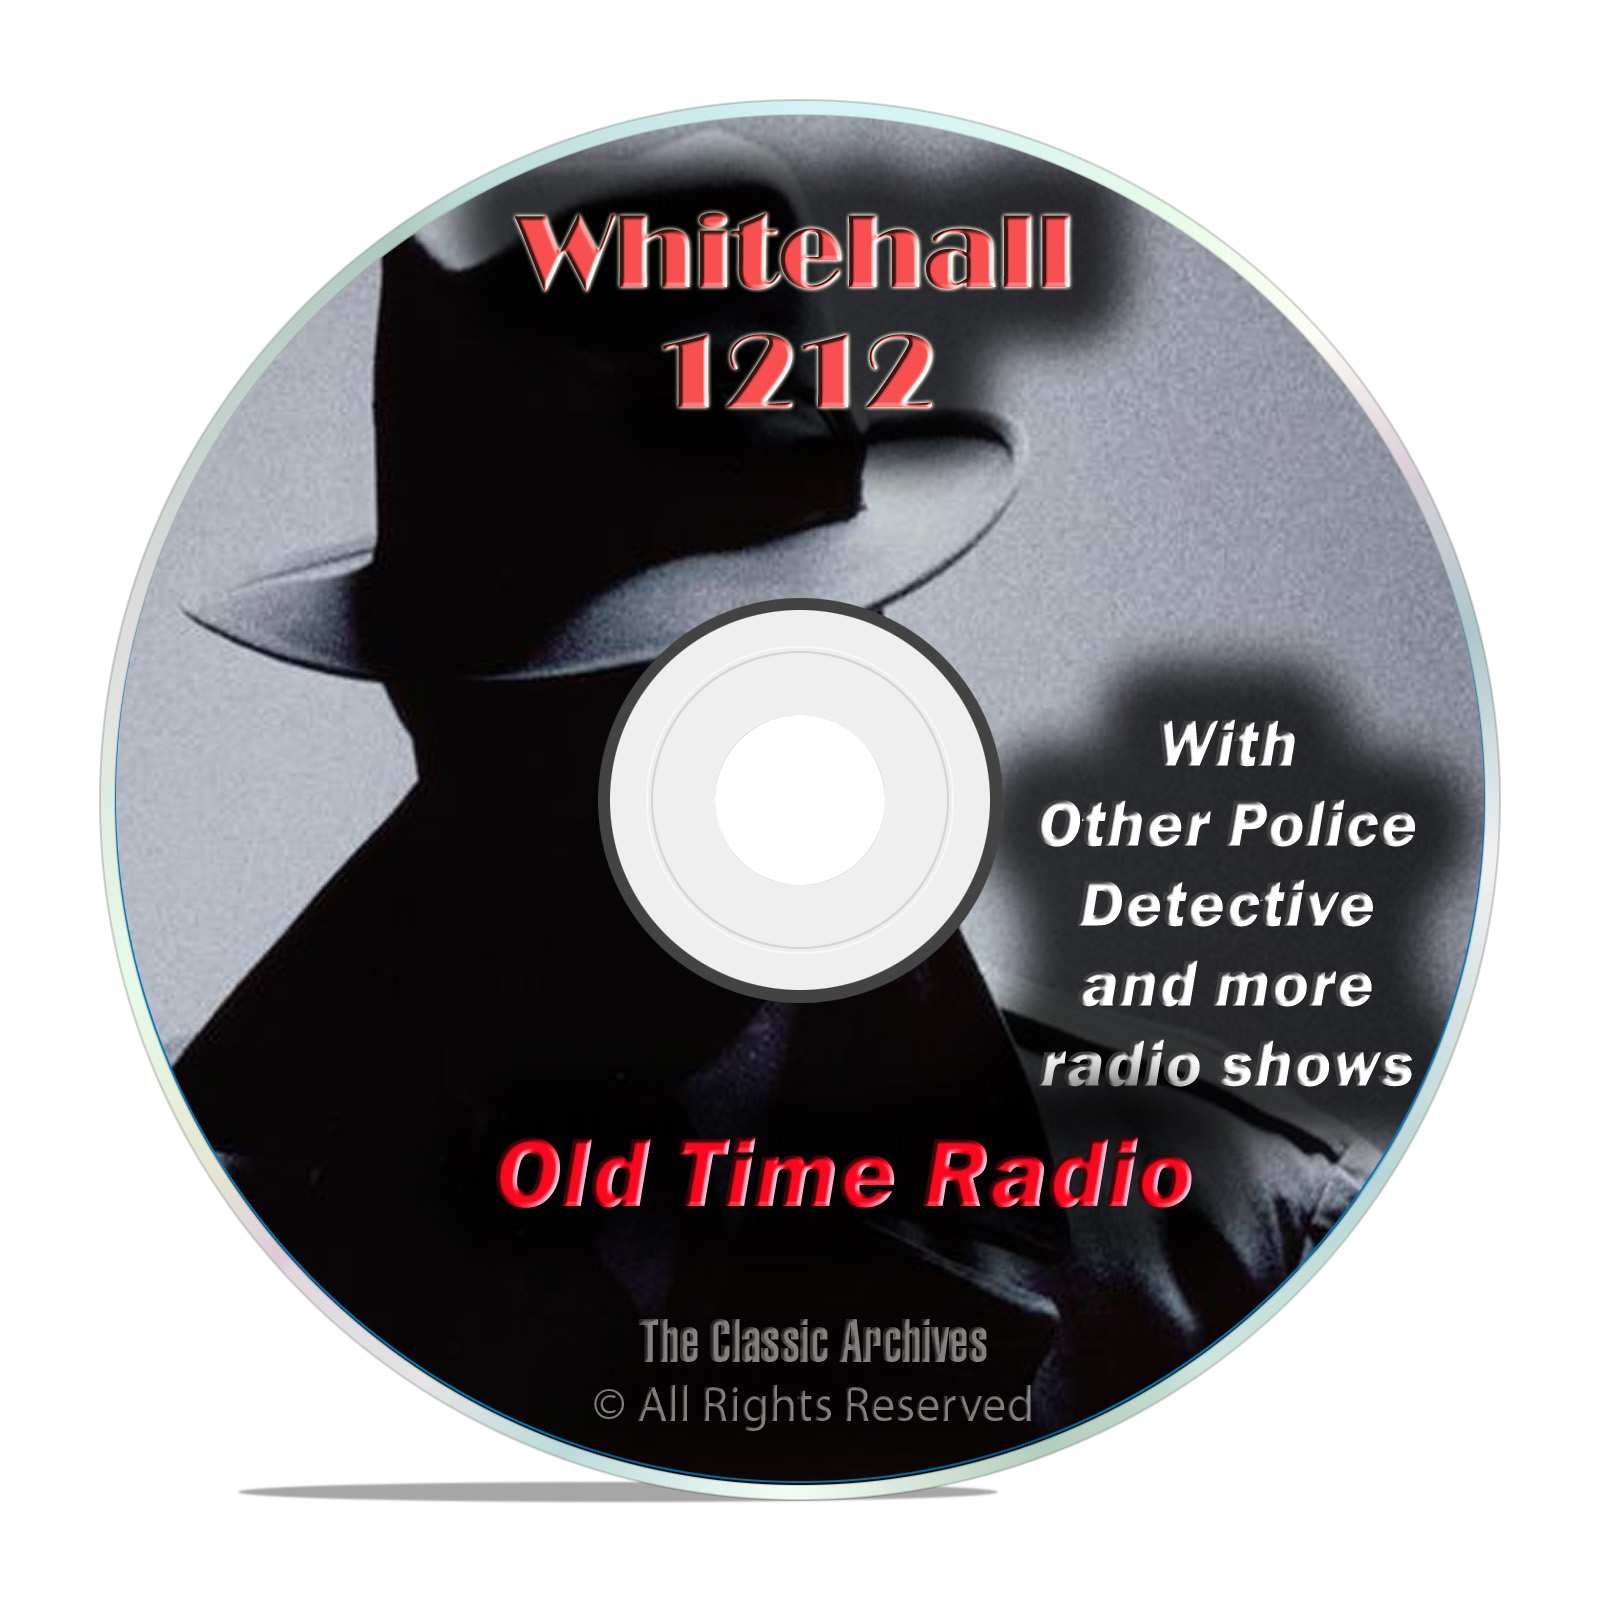 Whitehall 1212, 1,486 Old Time Radio Police Detective Crime Drama Shows DVD